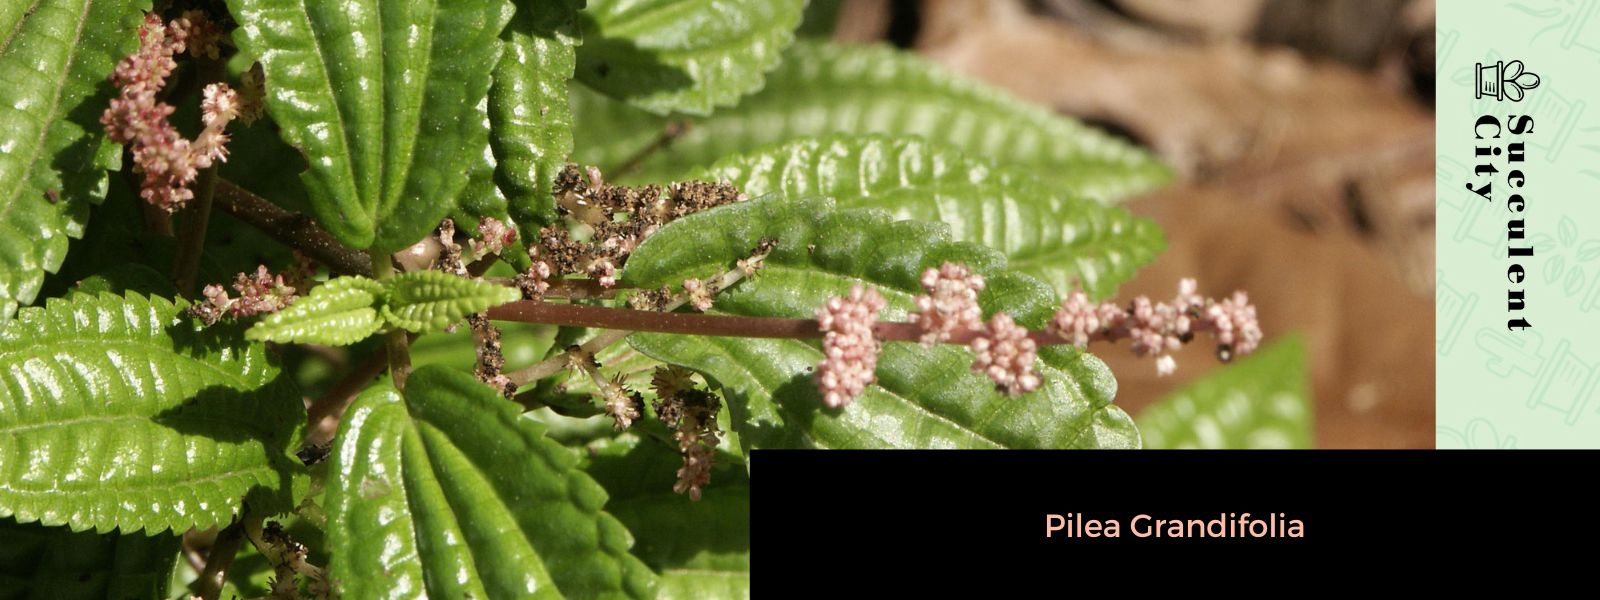 Pilea grandifolia